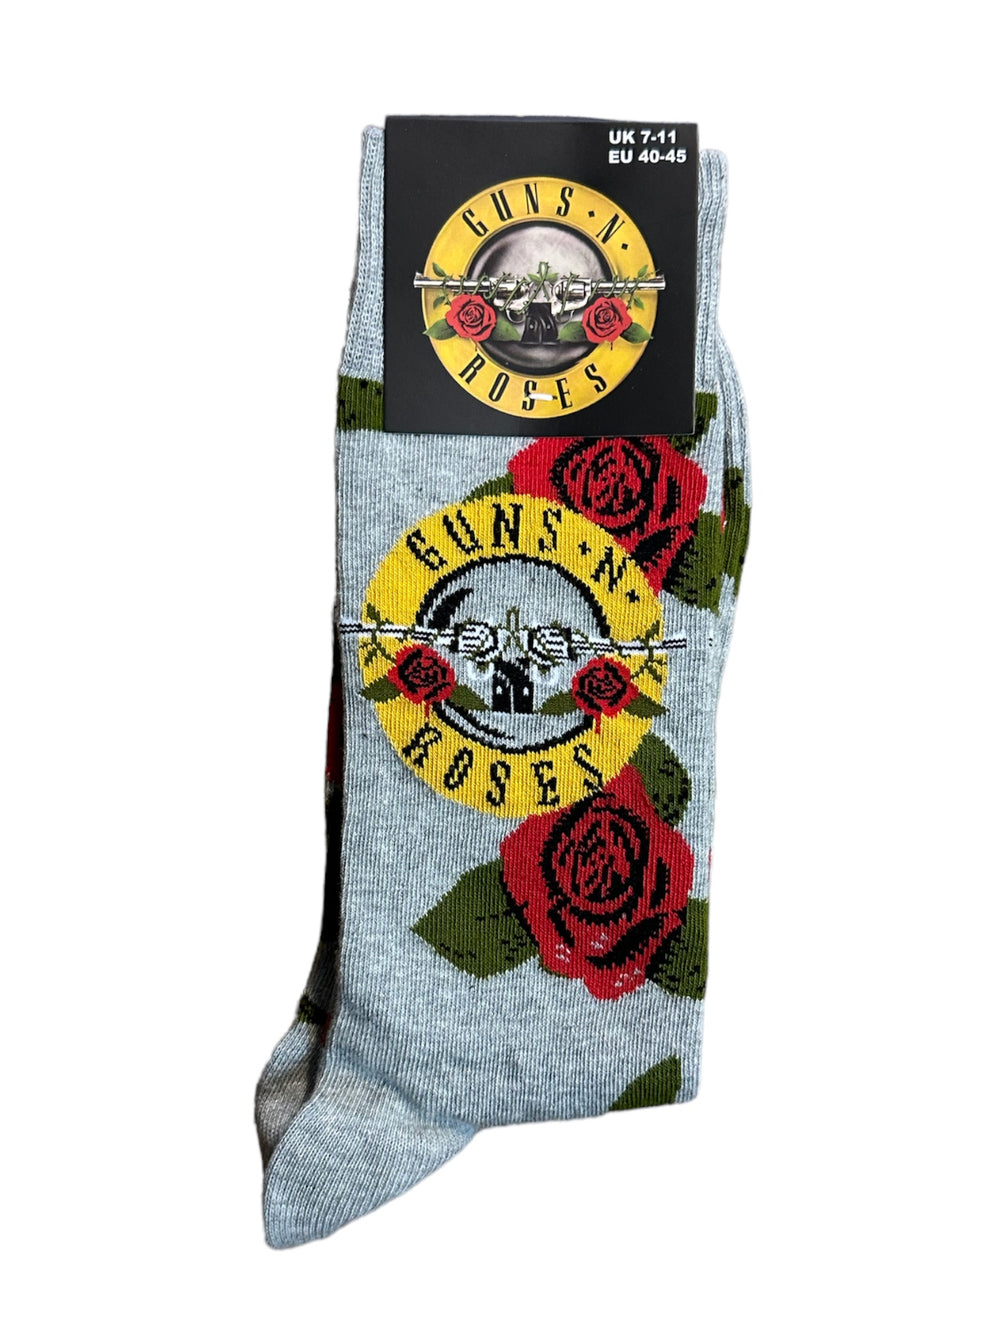 Guns N' Roses - Bullet & Roses Grey Official Product 1 Pair Jacquard Socks Brand New